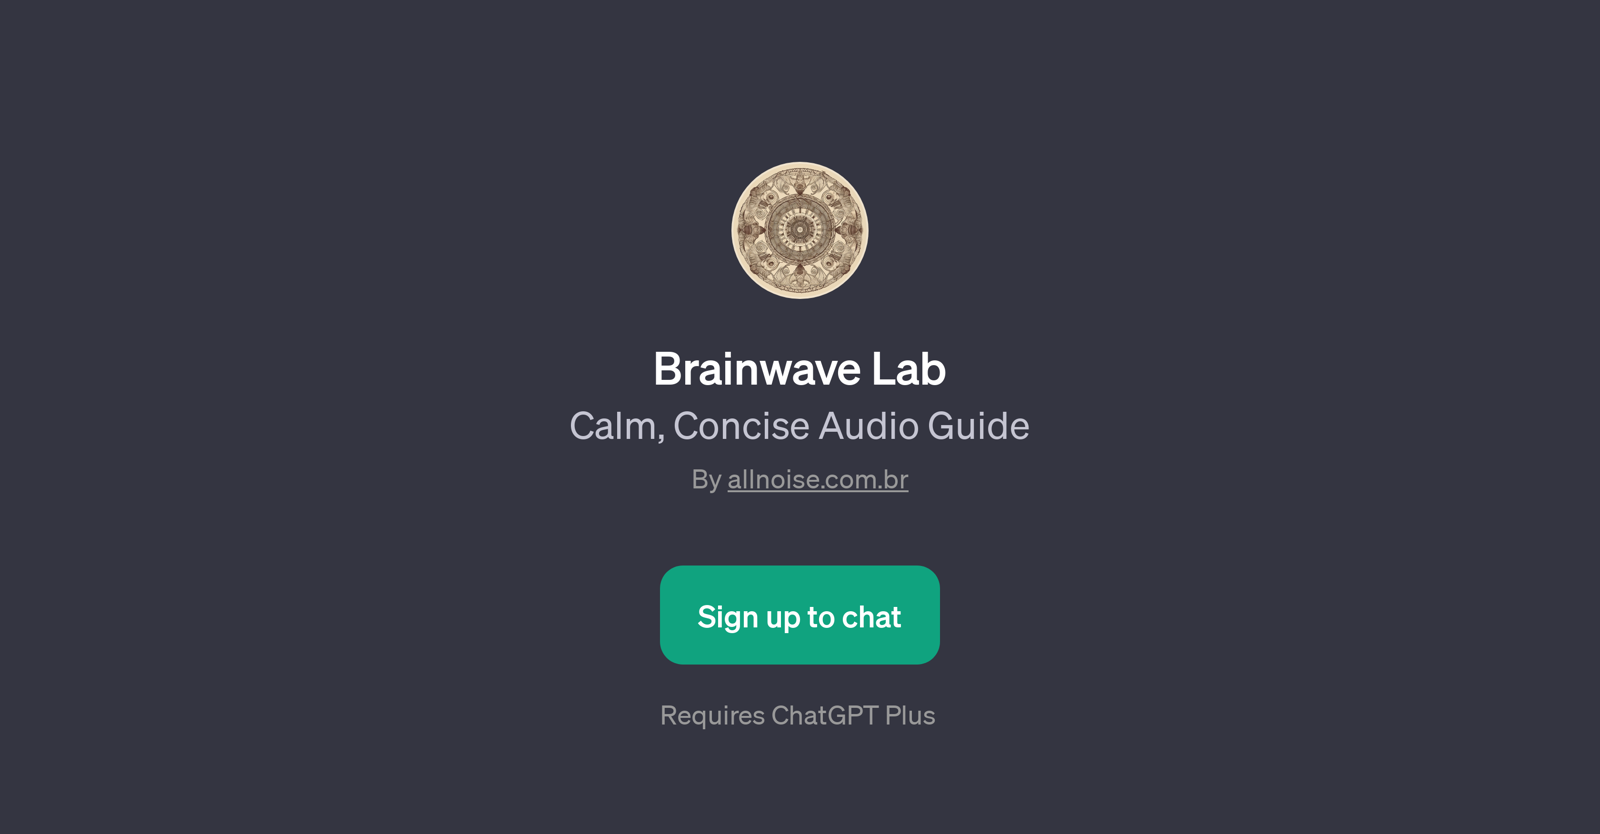 Brainwave Lab website